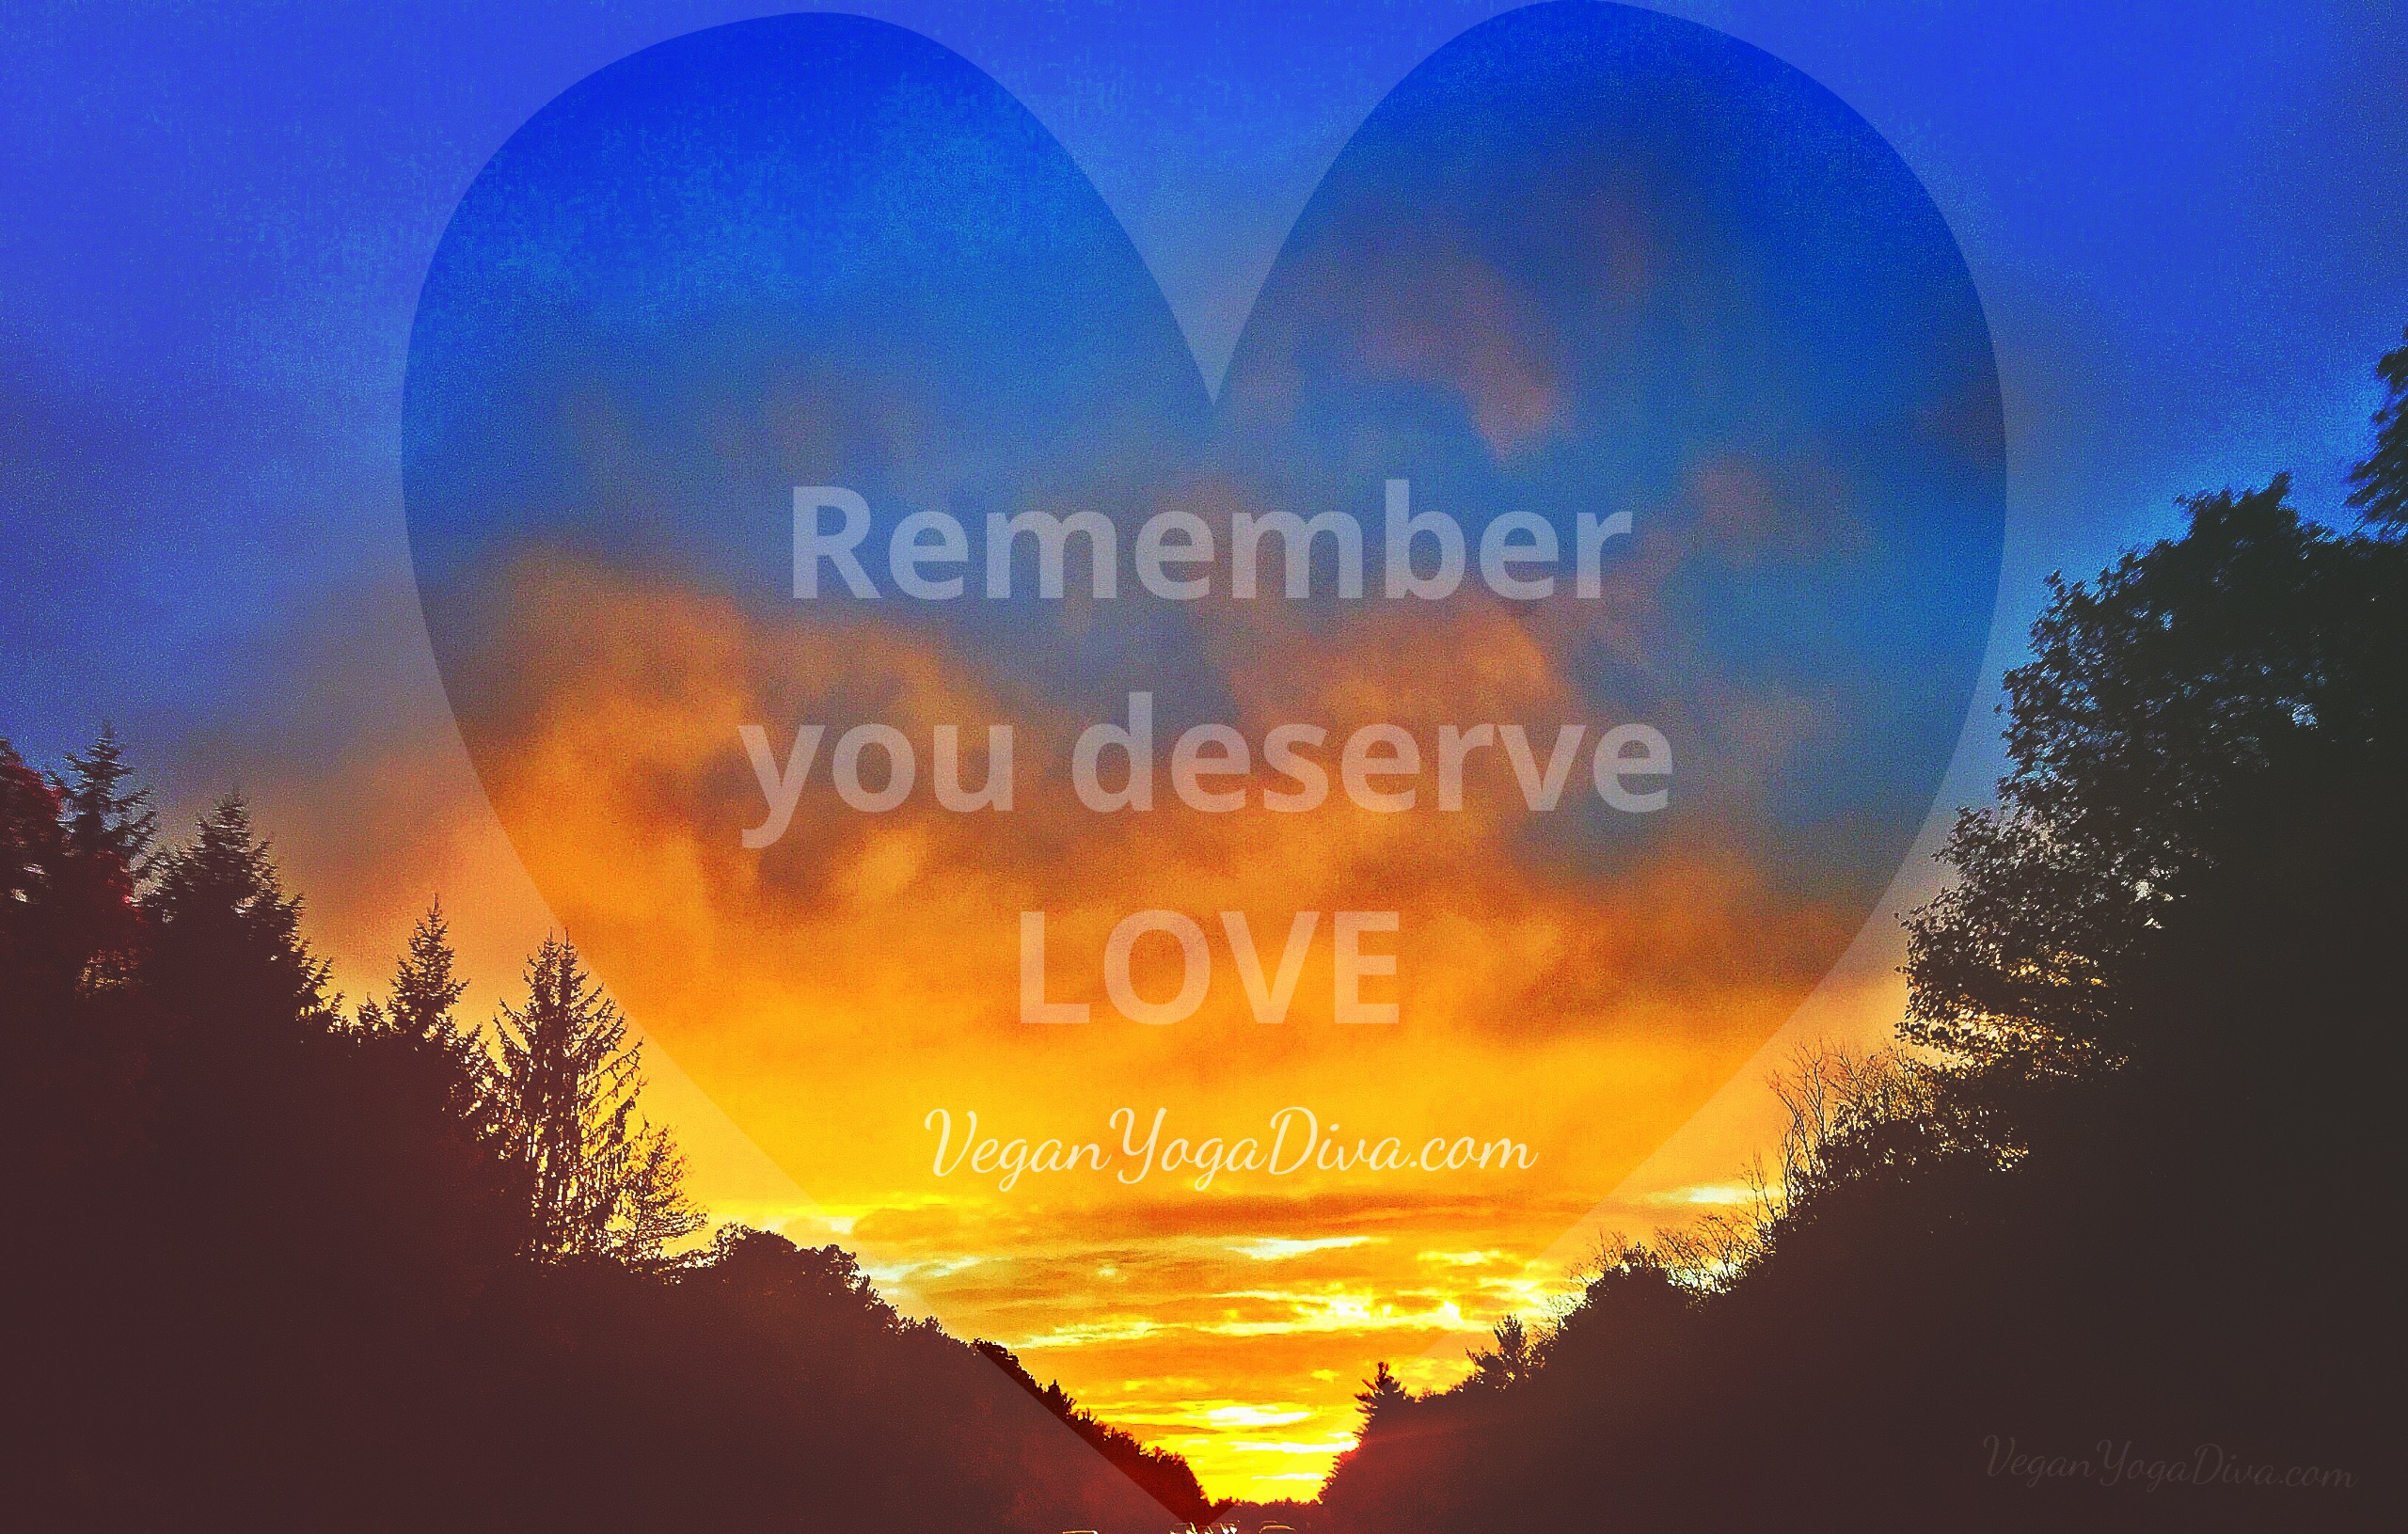 We all deserve love